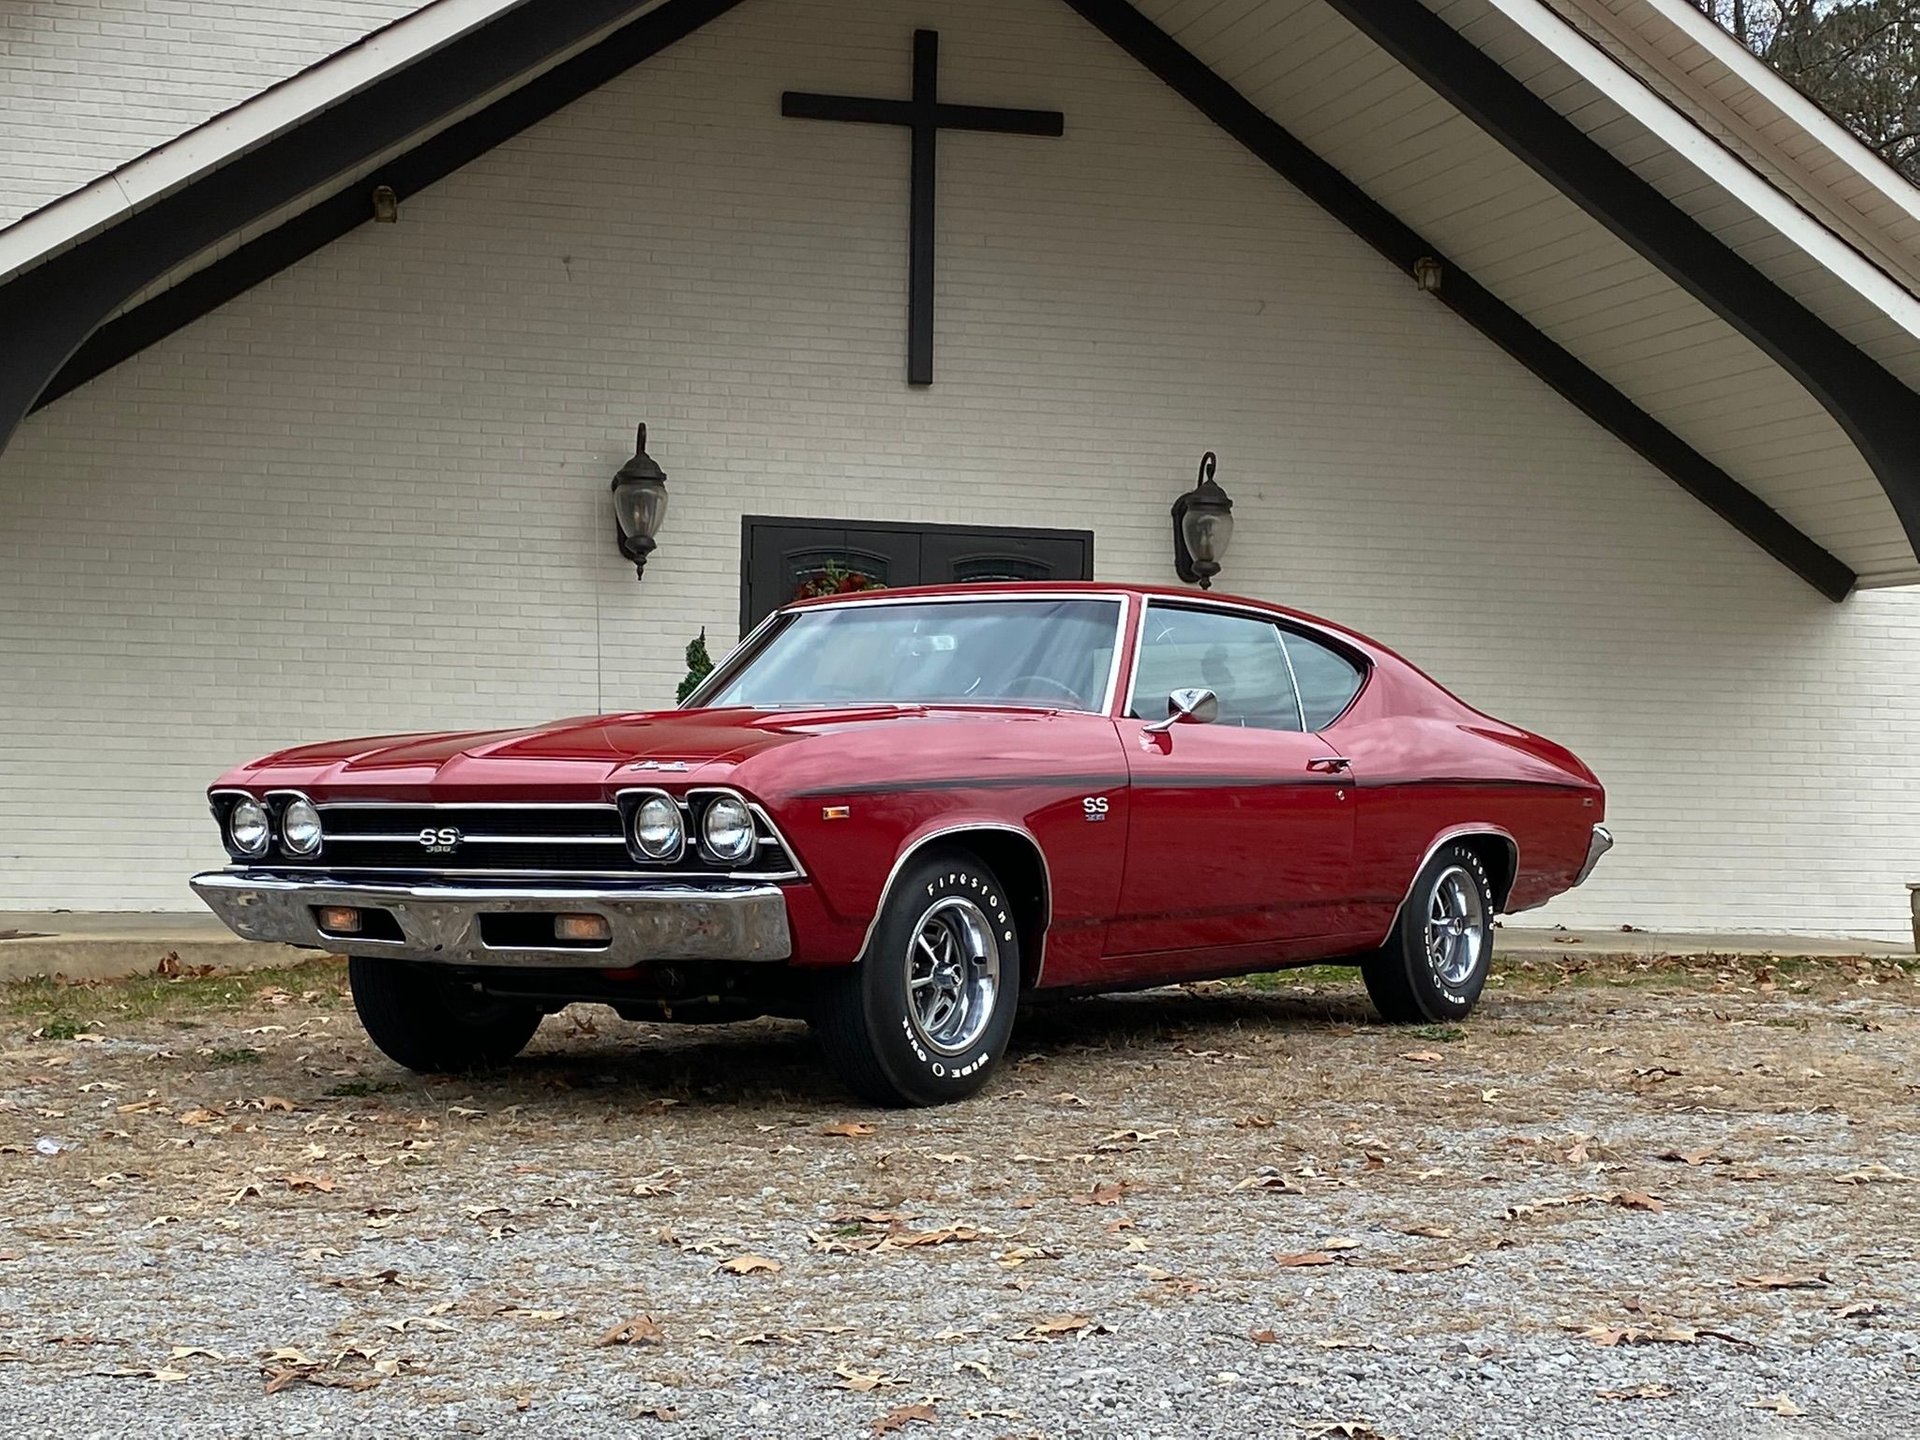 1969 Chevrolet Chevelle | GAA Classic Cars